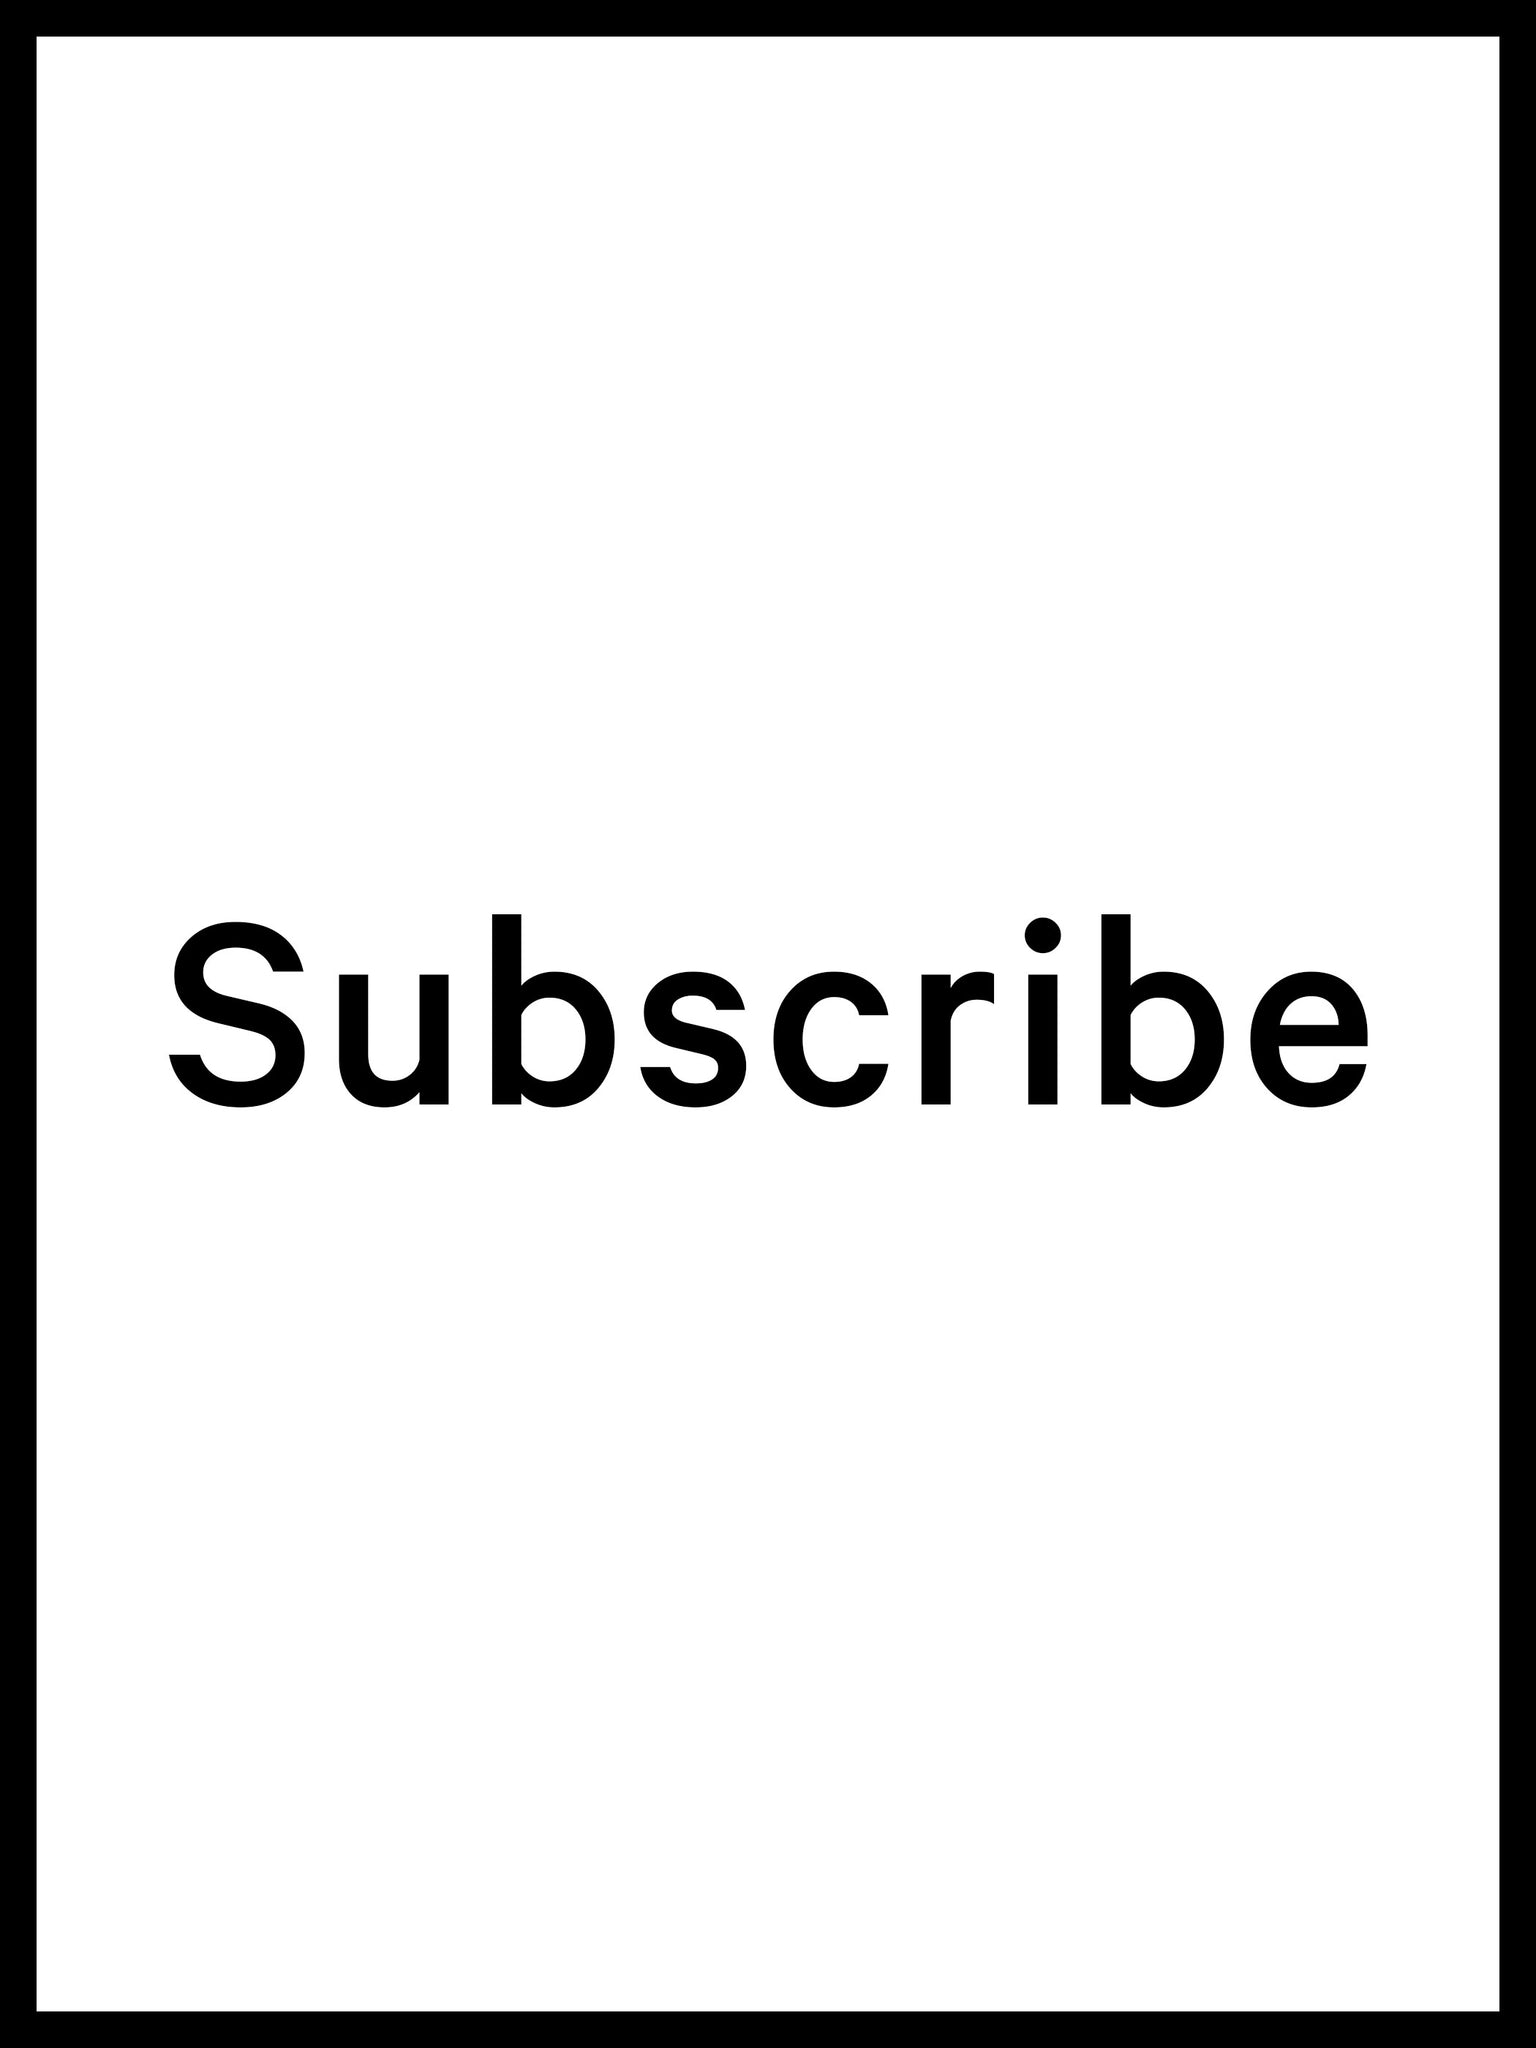 Dork subscription